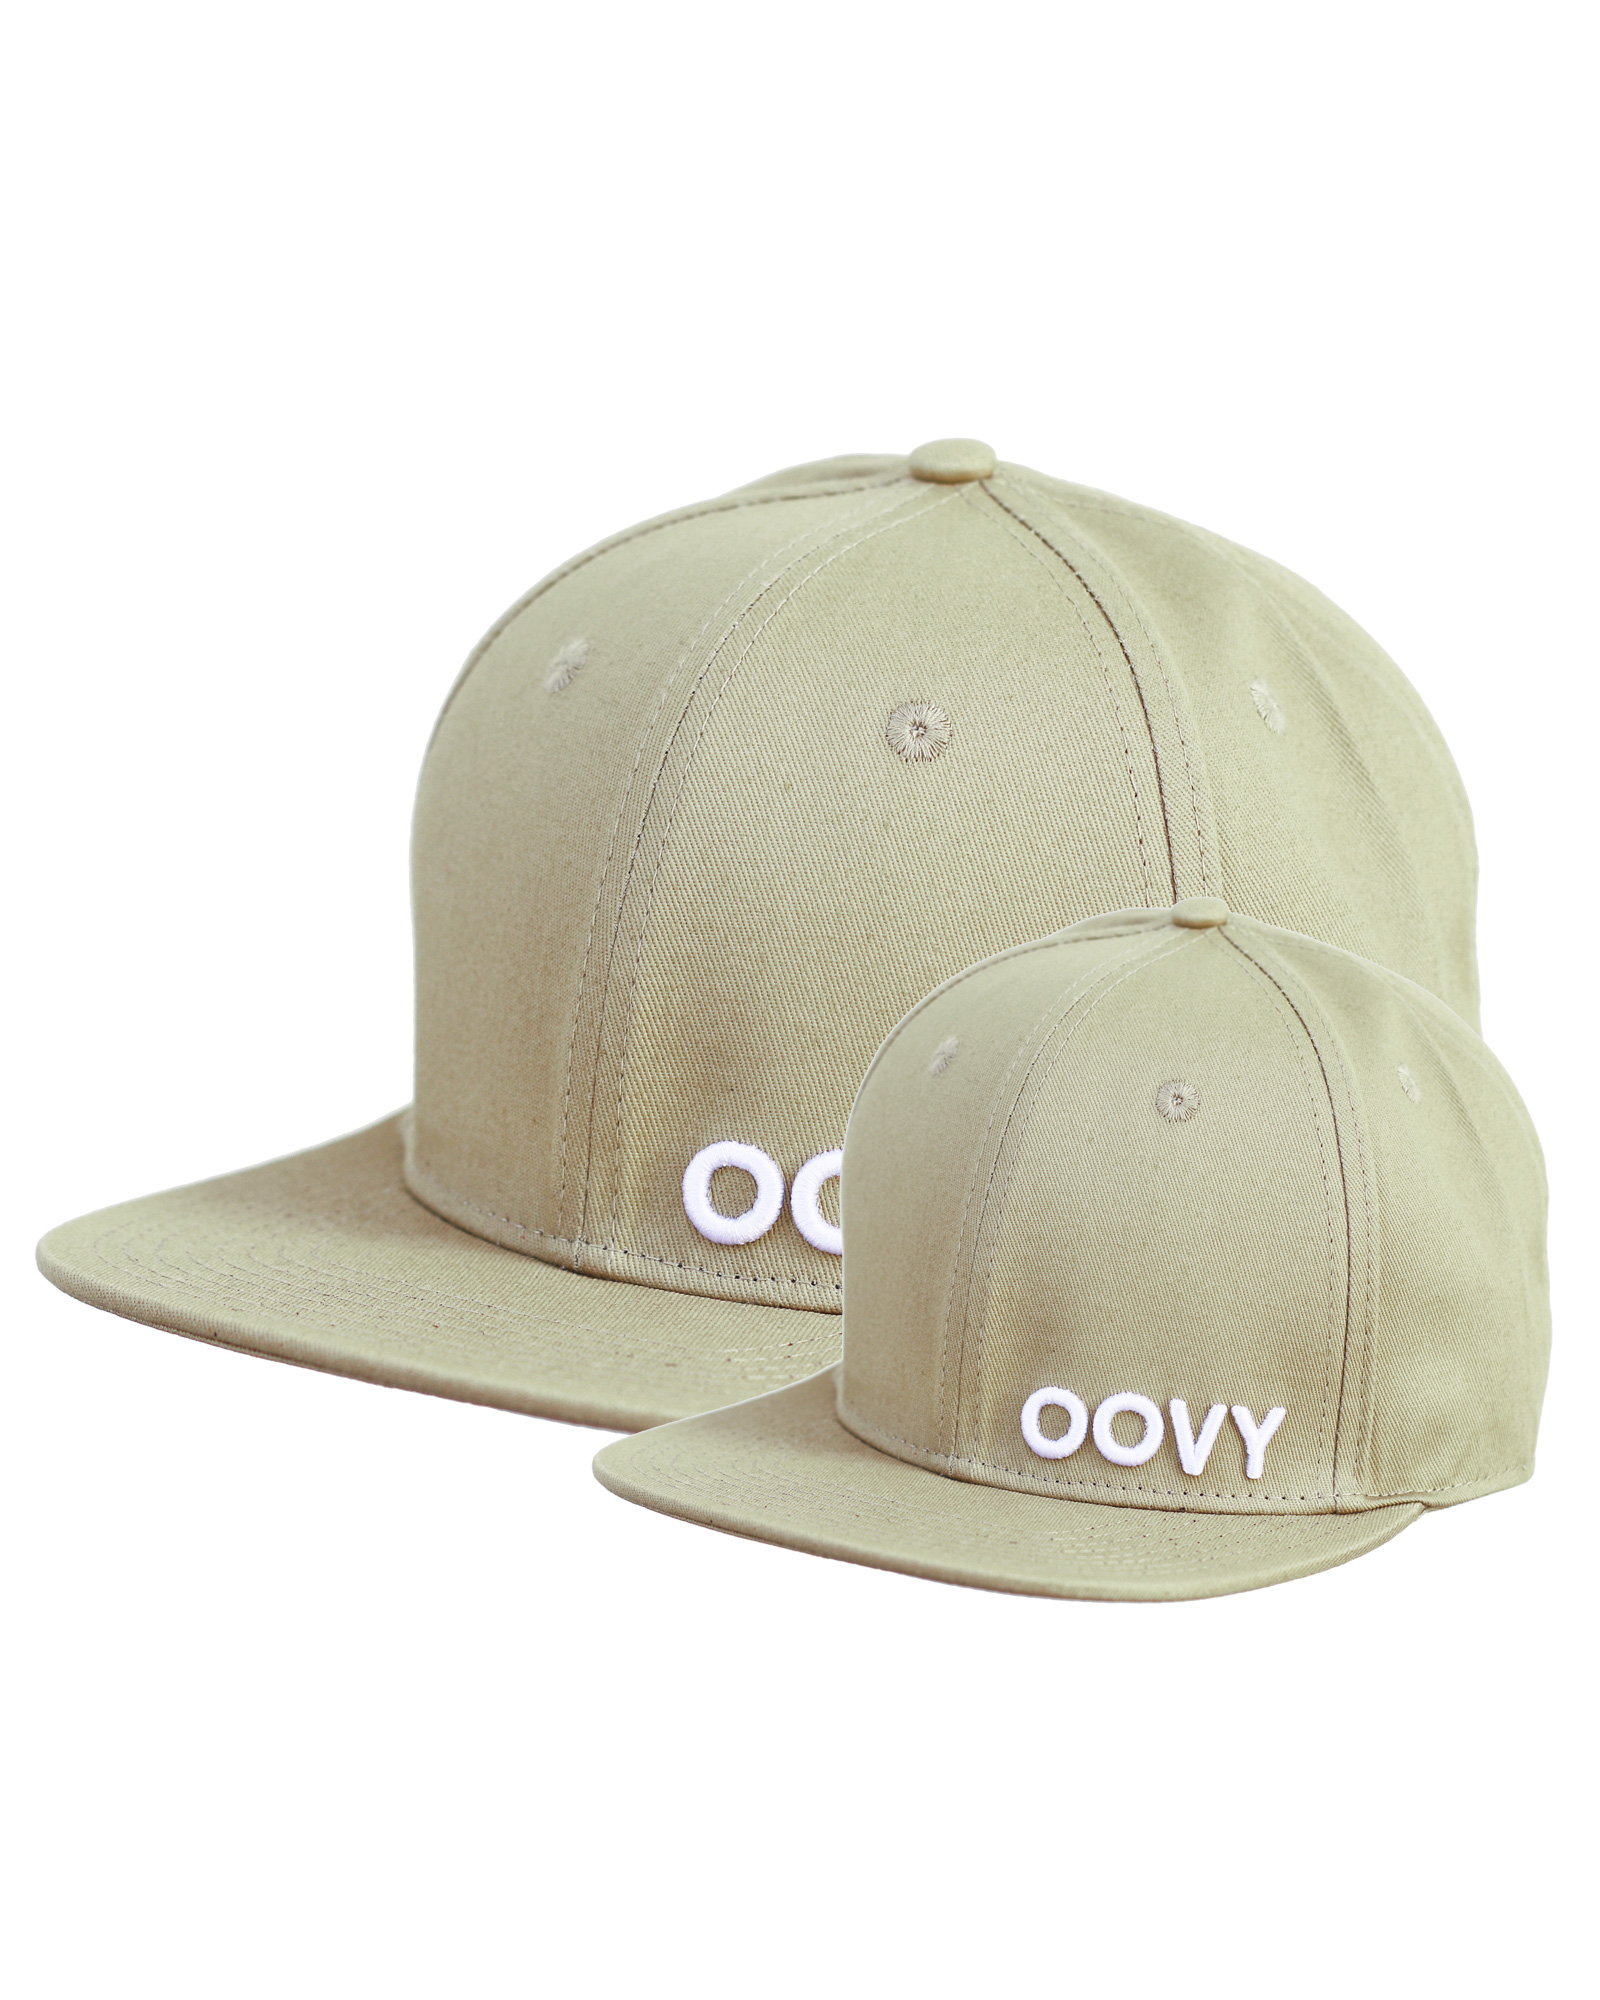 OOVY Kids Fern Snapback Father & Son hats